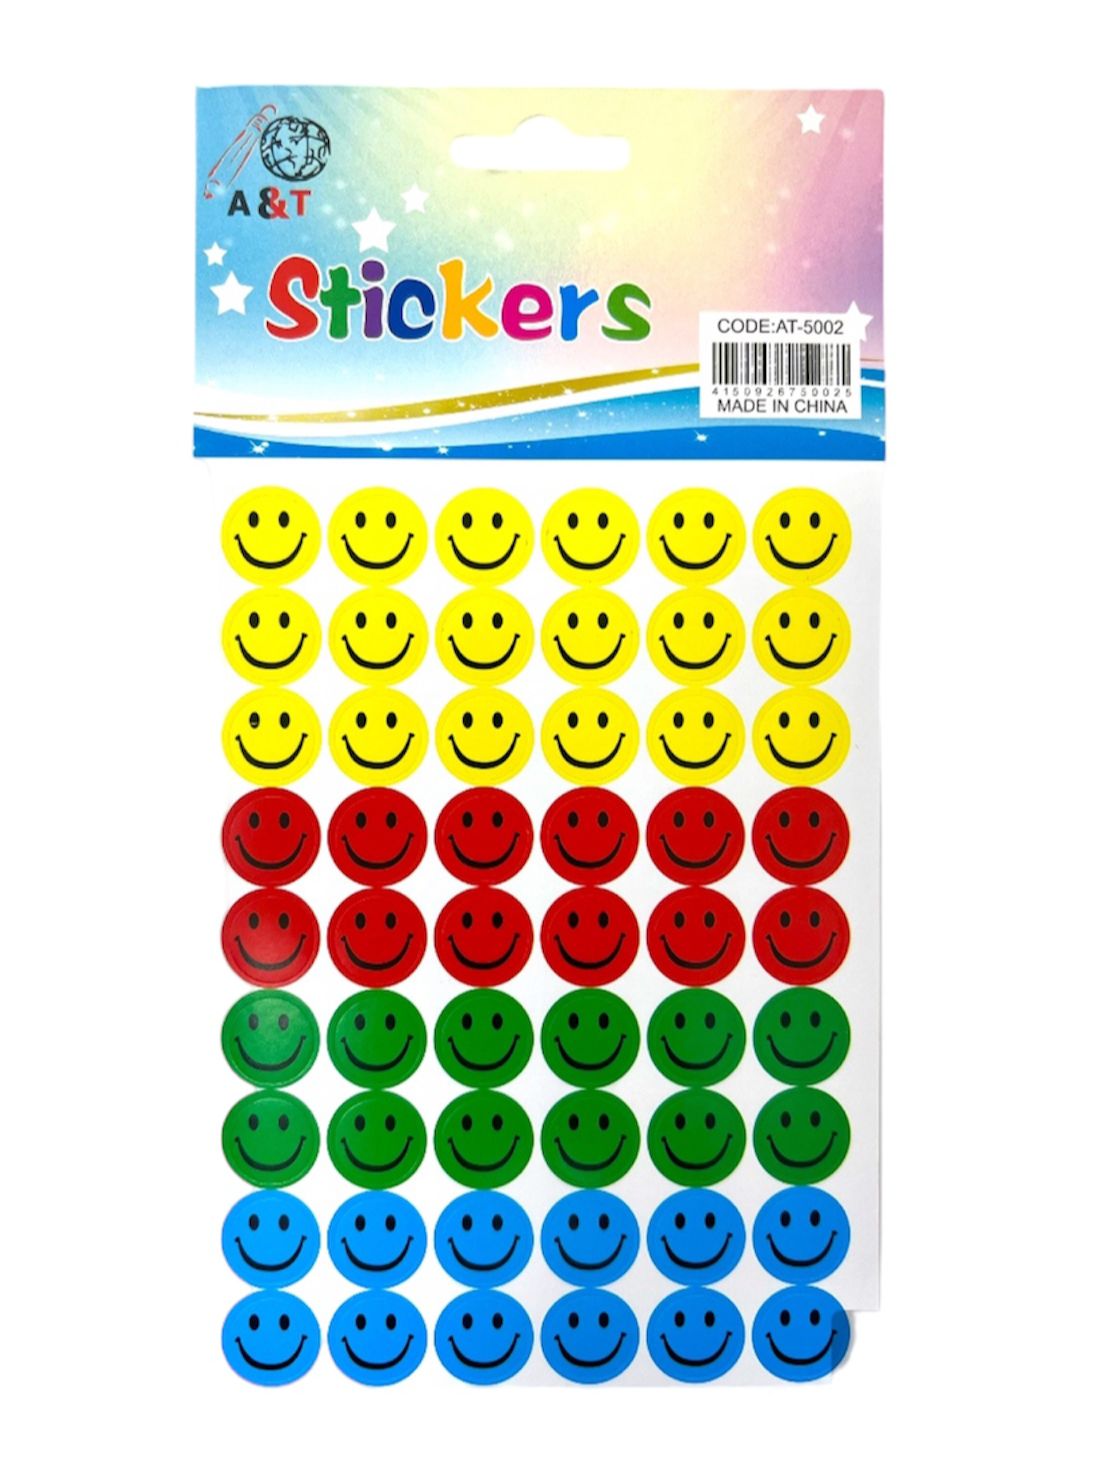 A&T Stickers Smiley Colored || ستيكرز ملونة سمايلي